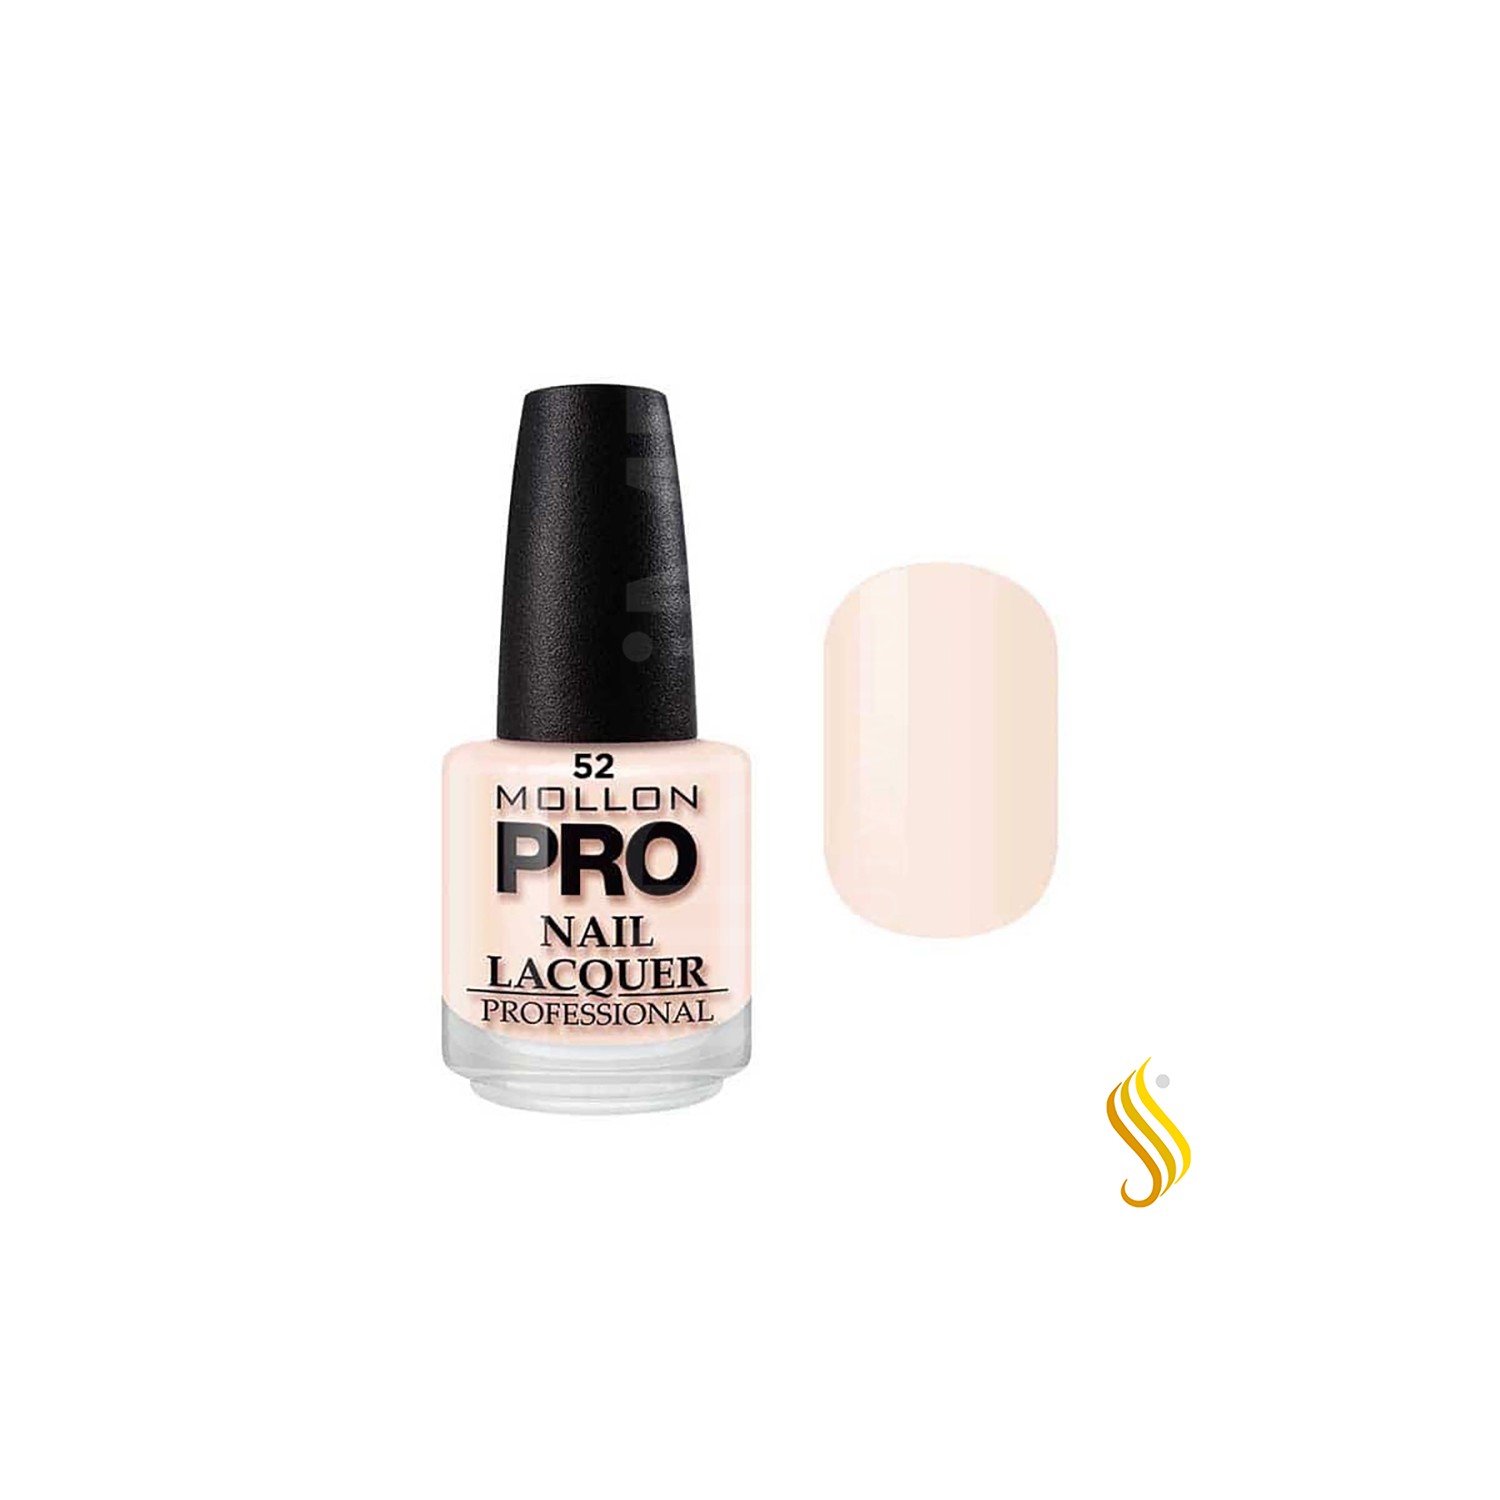 Mollon Pro Hardening Nail Lacquer Color 052 15ml